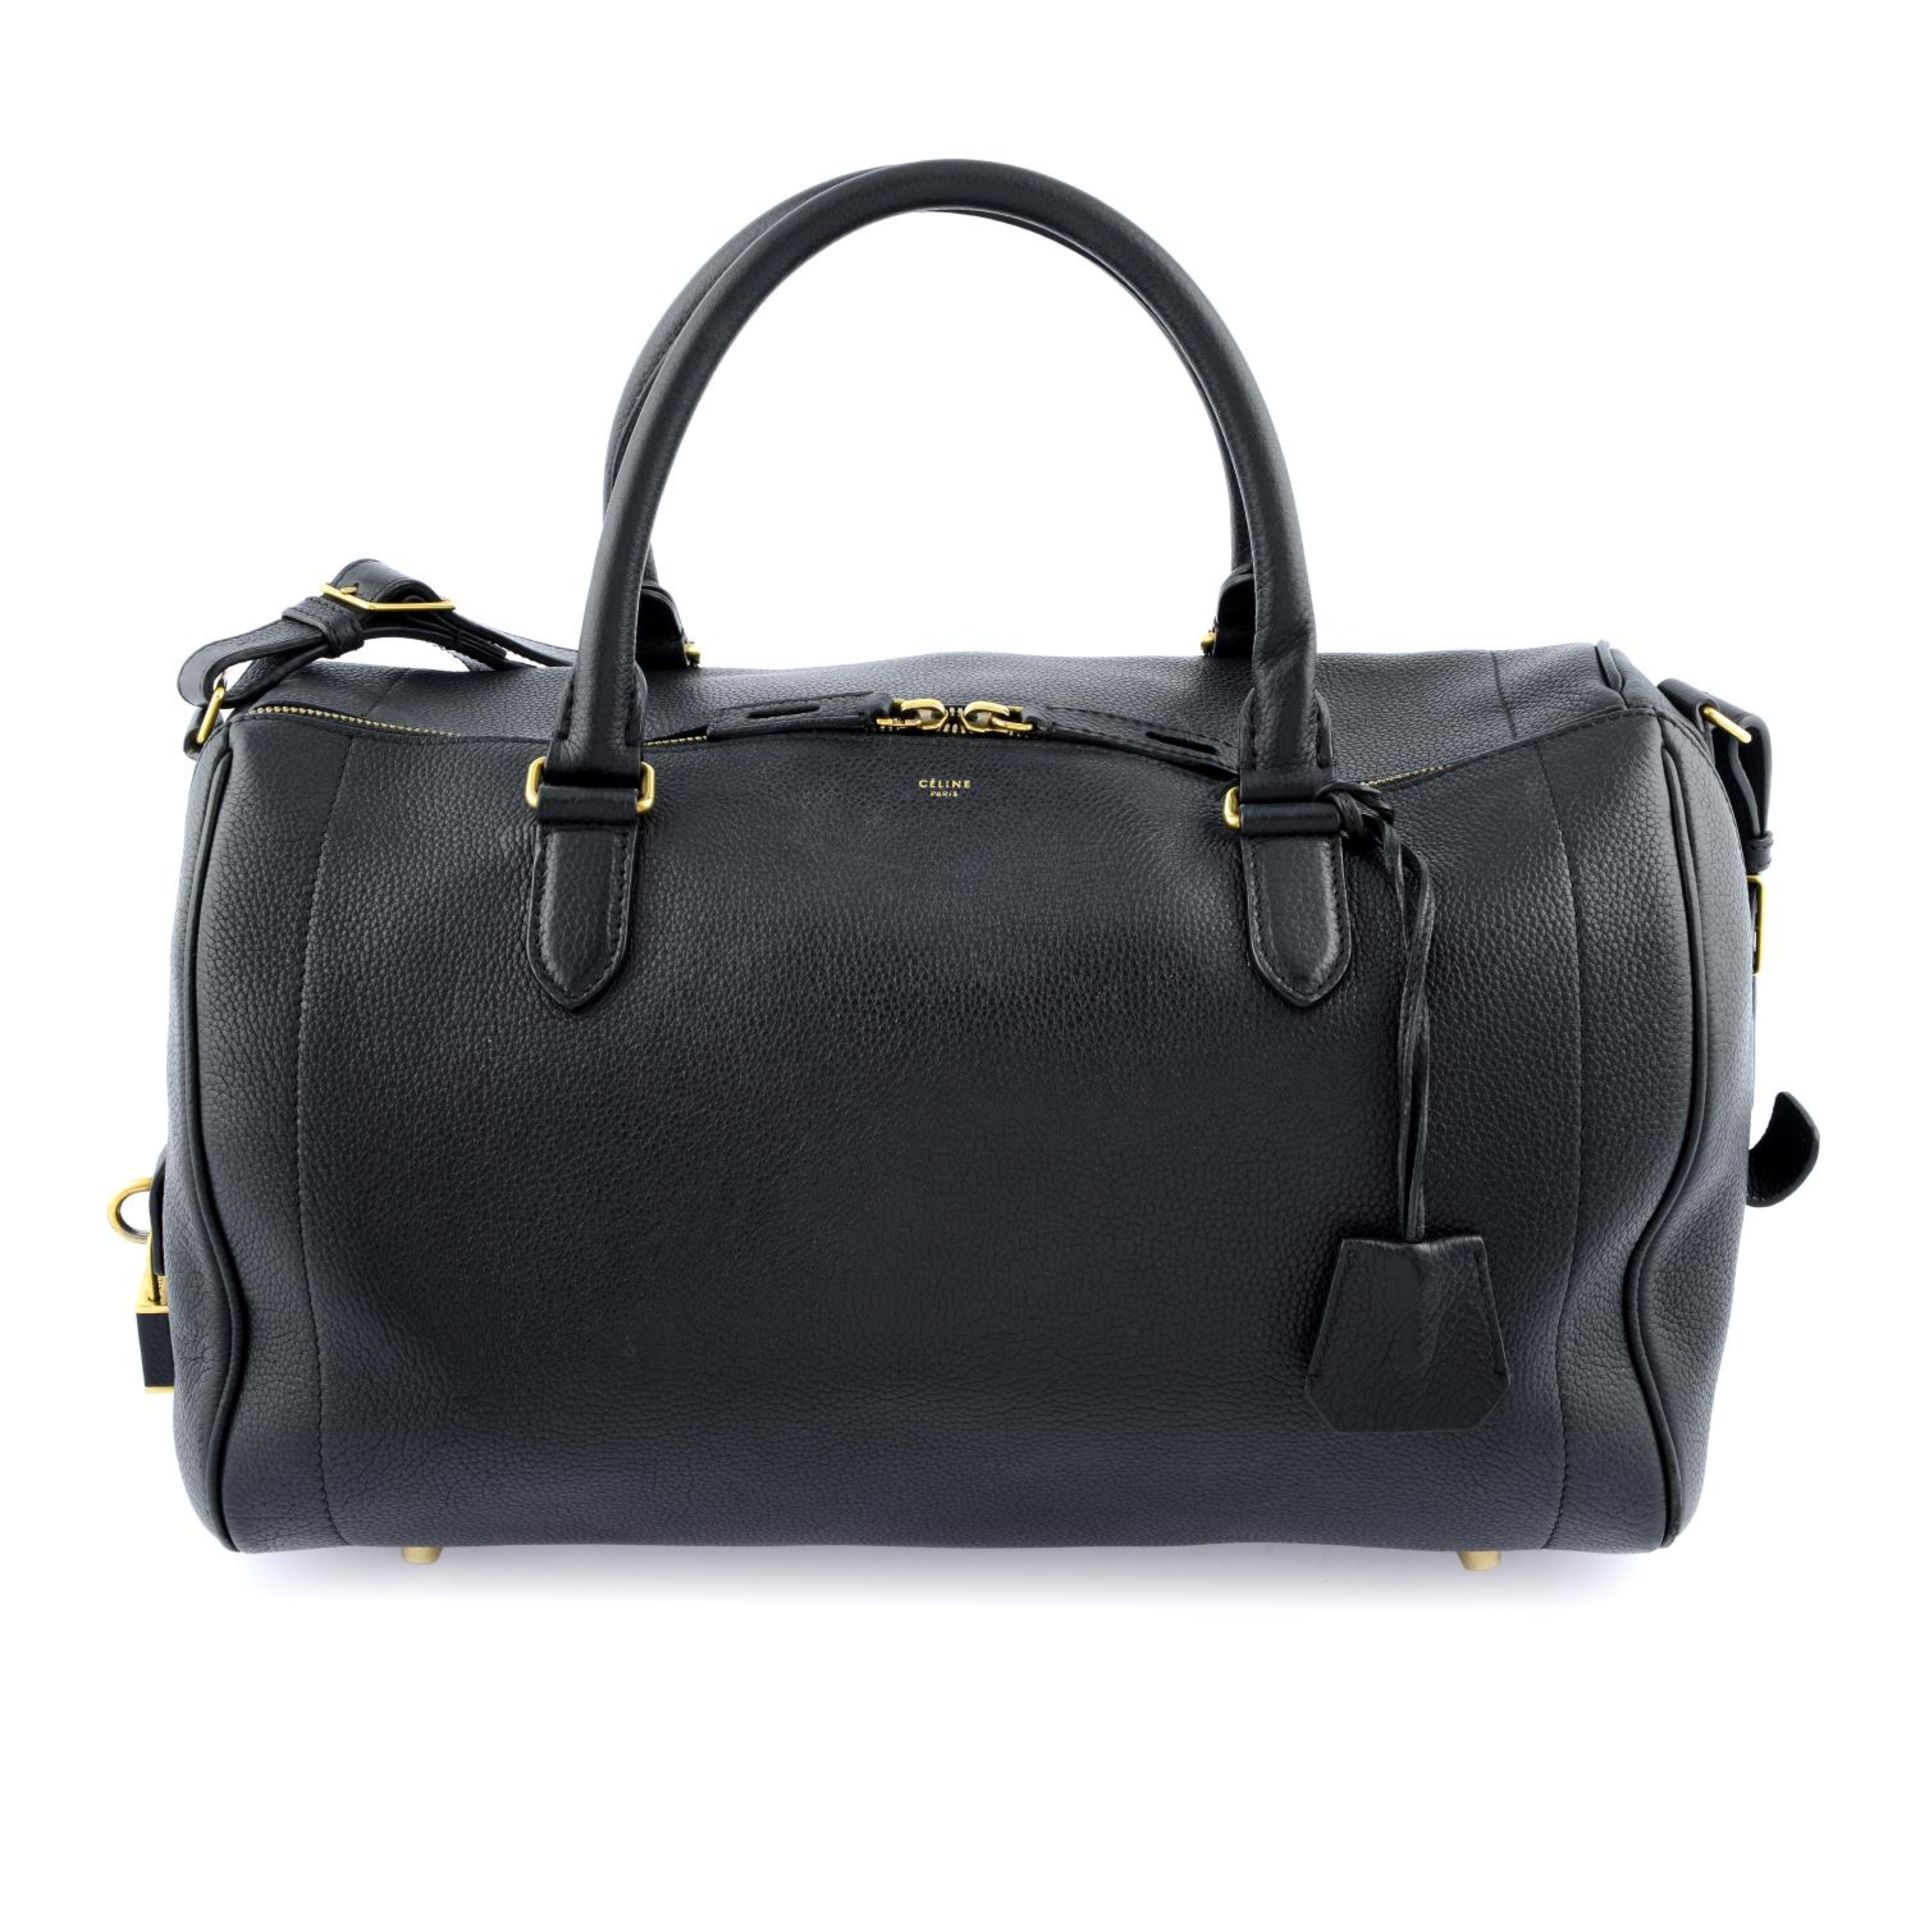 CÉLINE - a leather Boston handbag.